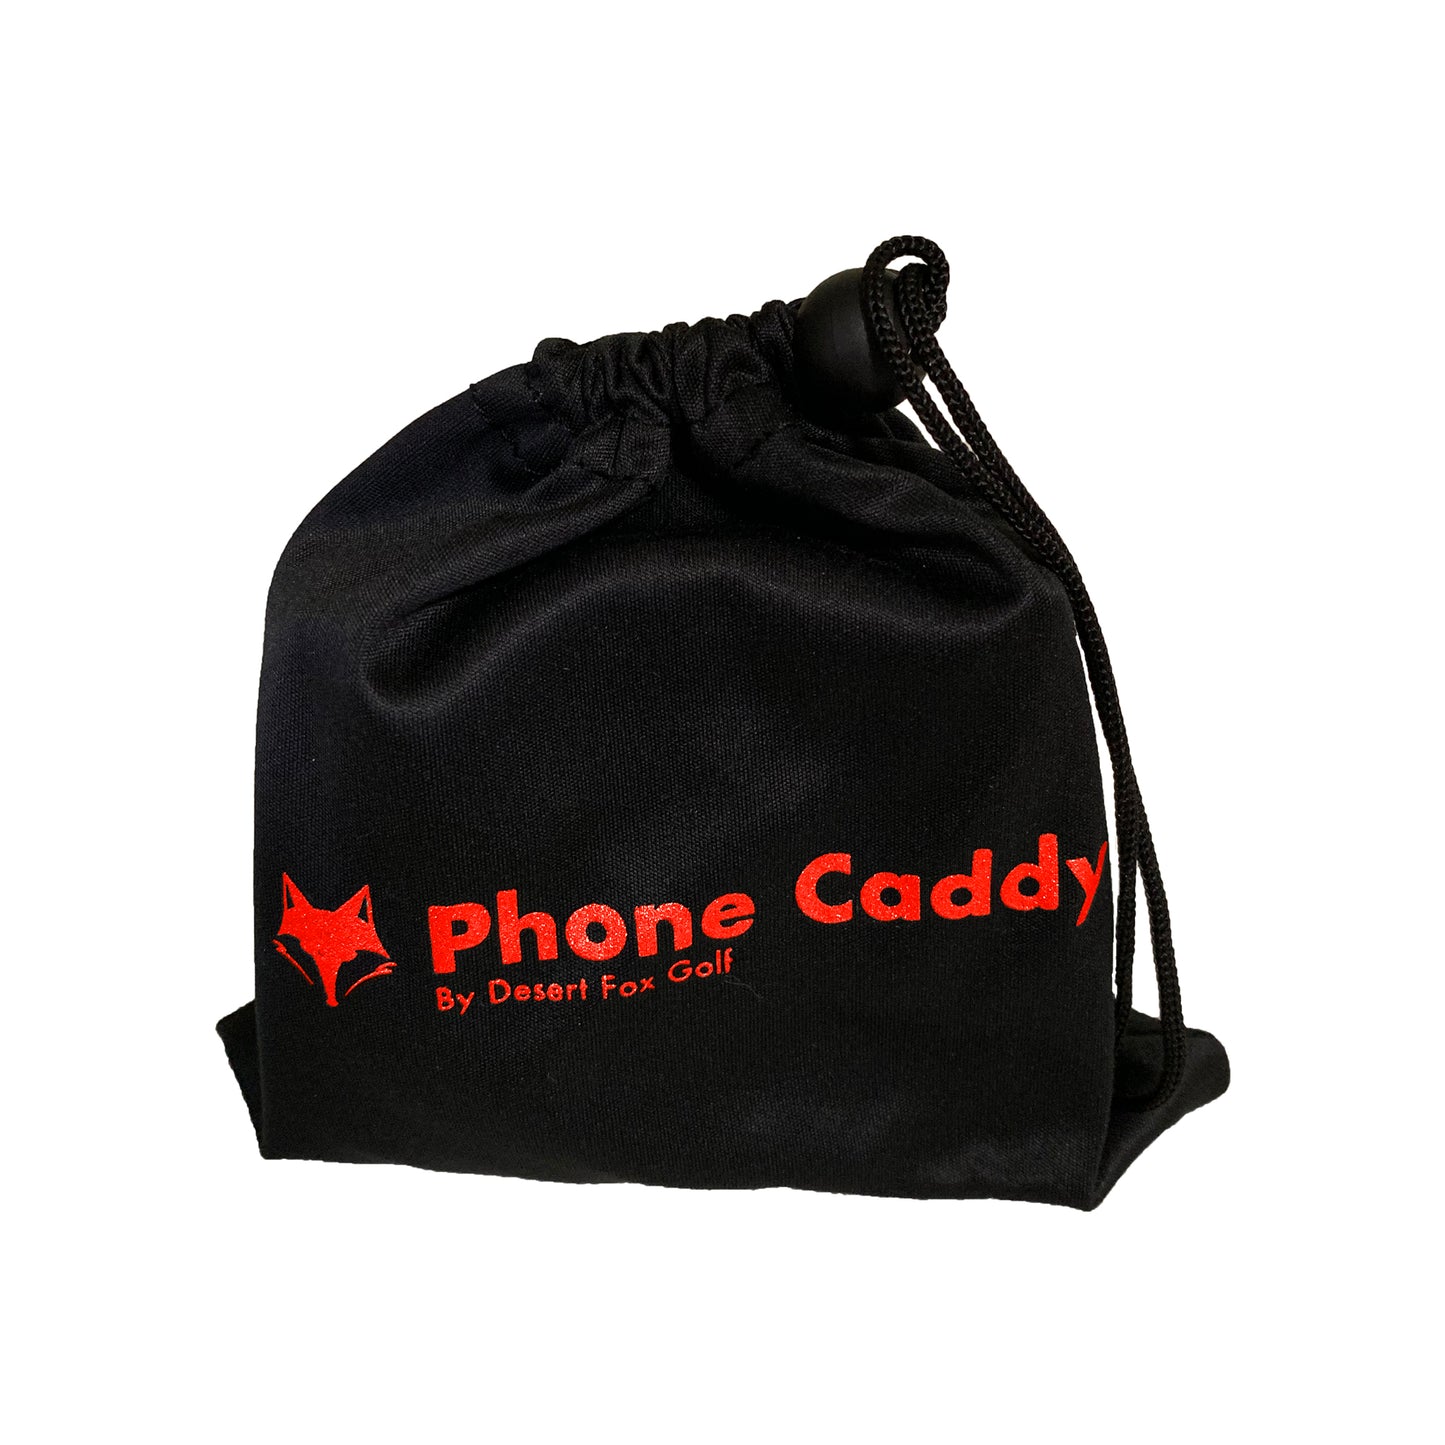 Phone Caddy - Make Golf Great Again